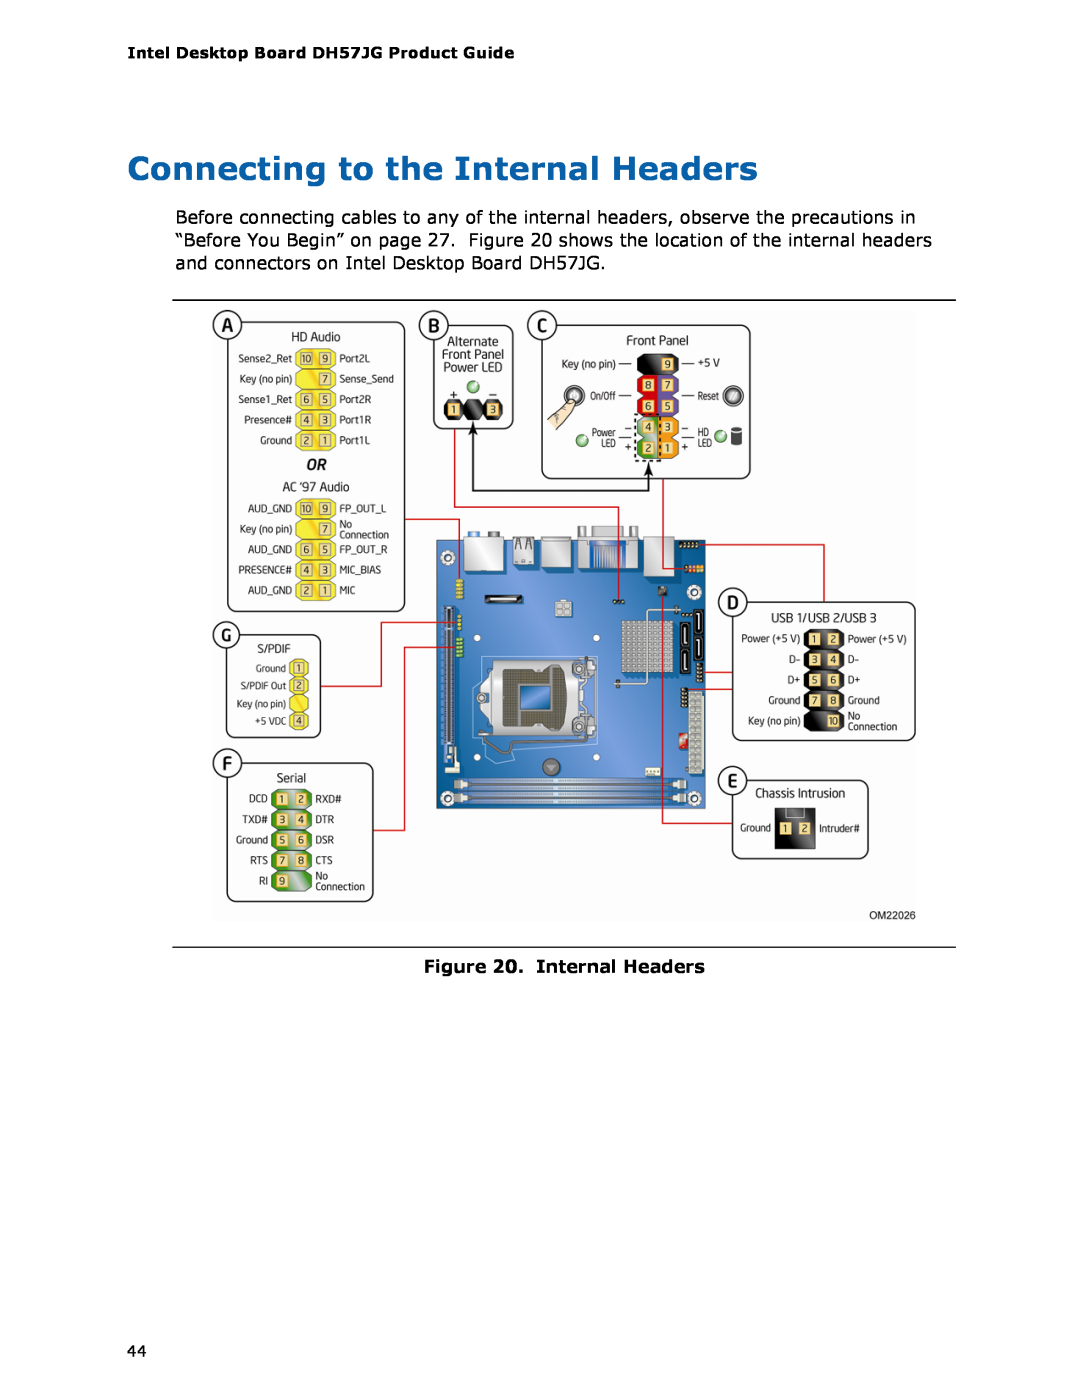 Intel BLKDH57JG manual Connecting to the Internal Headers, Intel Desktop Board DH57JG Product Guide 